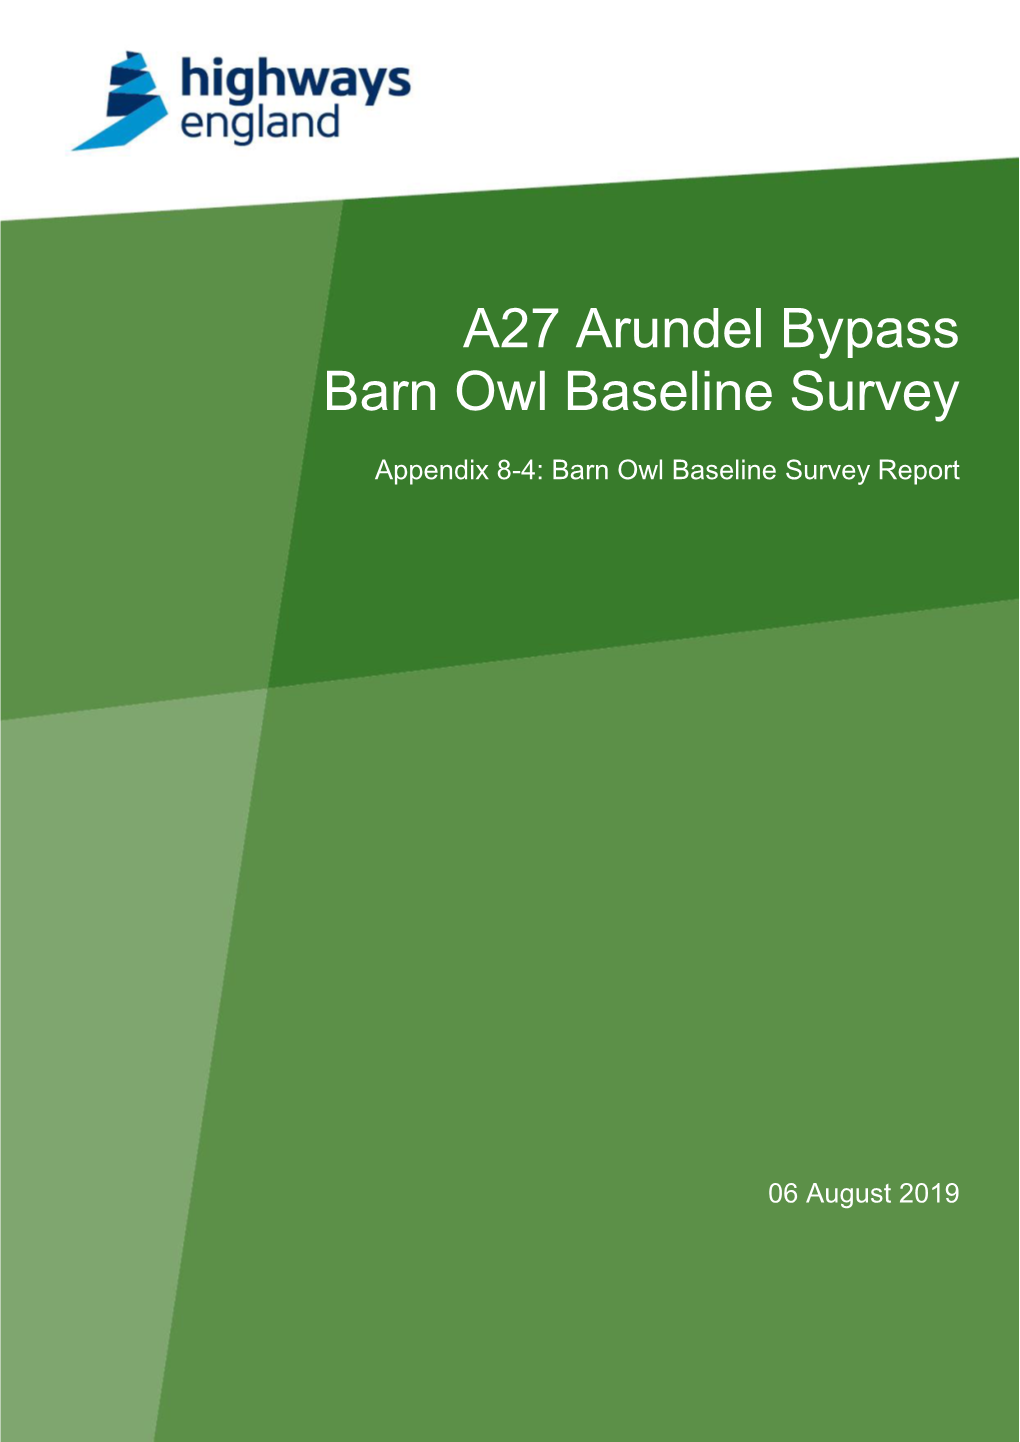 A27 Arundel Bypass Barn Owl Baseline Survey